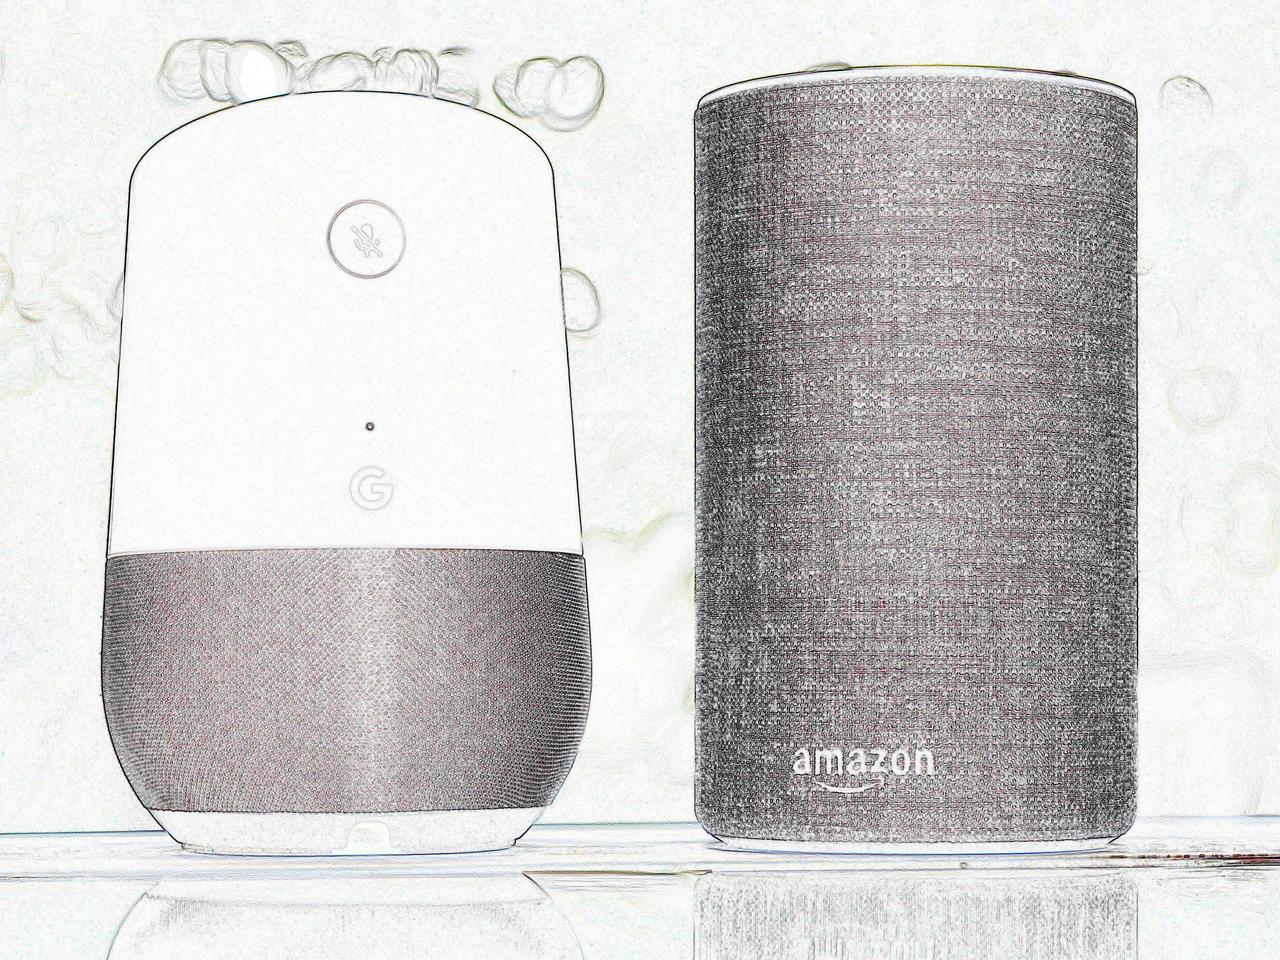 AmazonとGoogleのバトルがホームデバイスに飛び火。Amazon、今度はNest製品の取り扱いをやめる